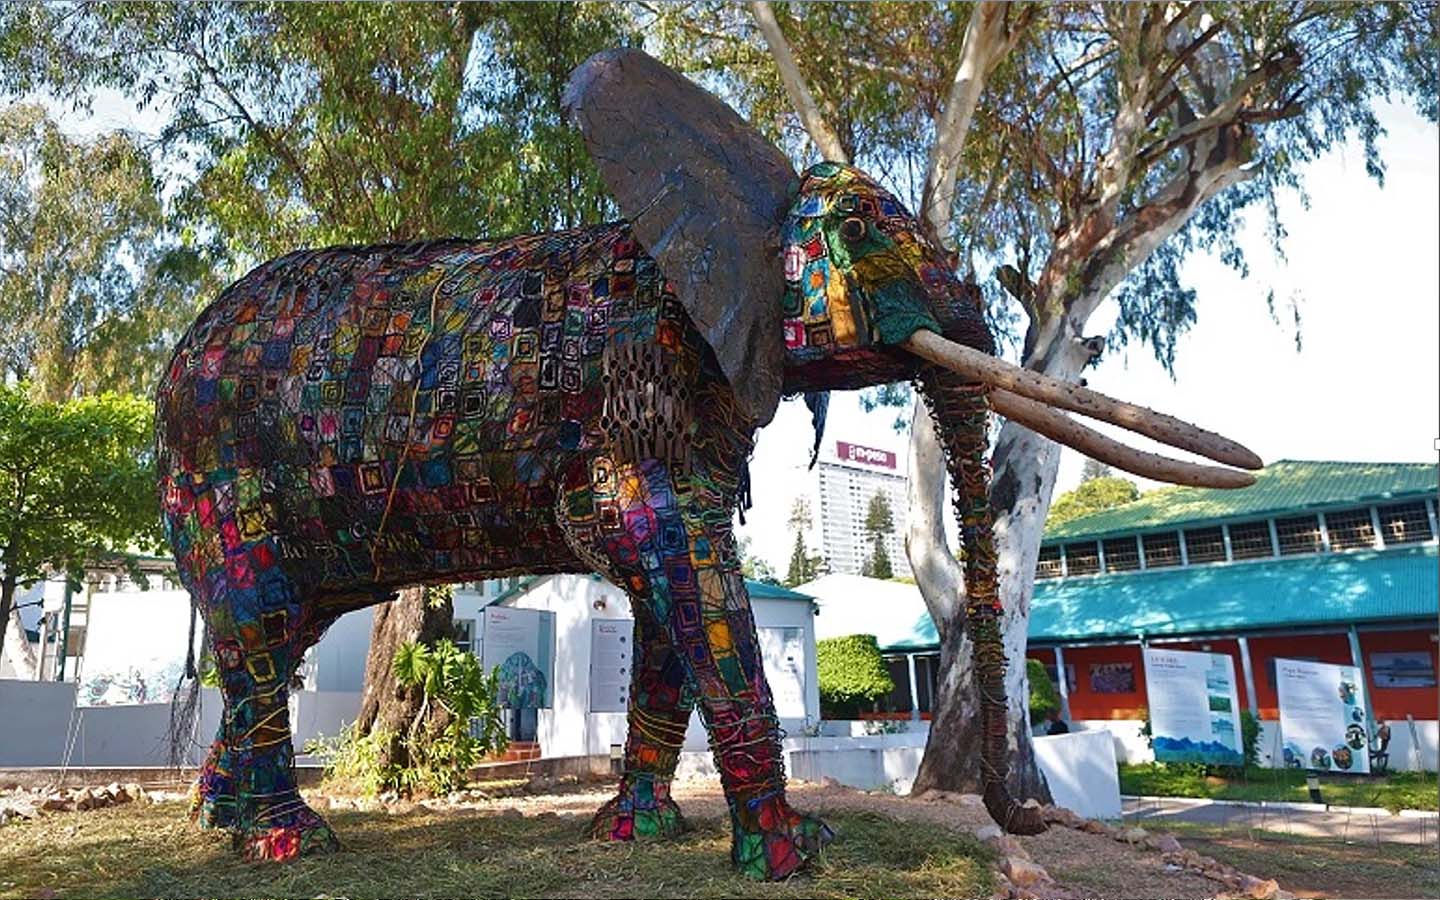 A unique public sculpture celebrates an anti-poaching milestone in Mozambique